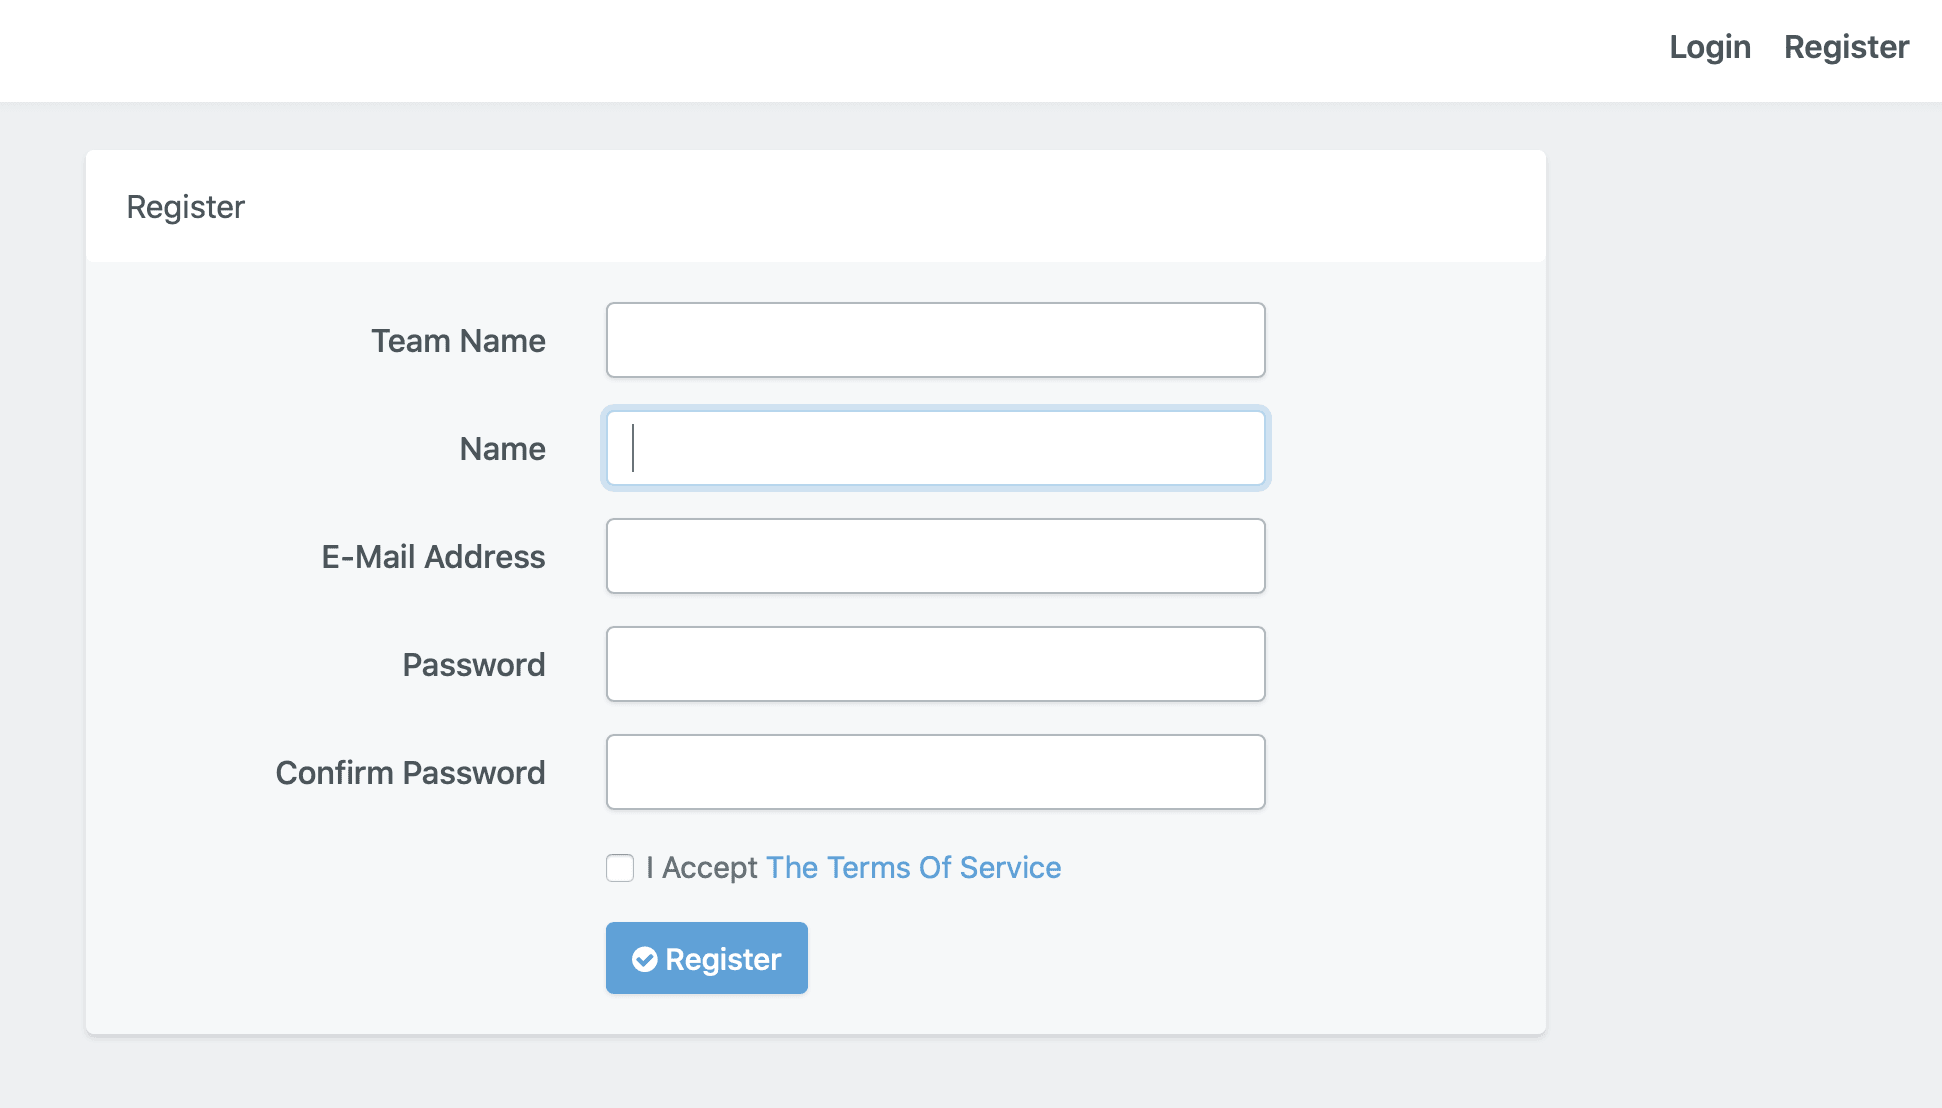 Screenshot of the registration form